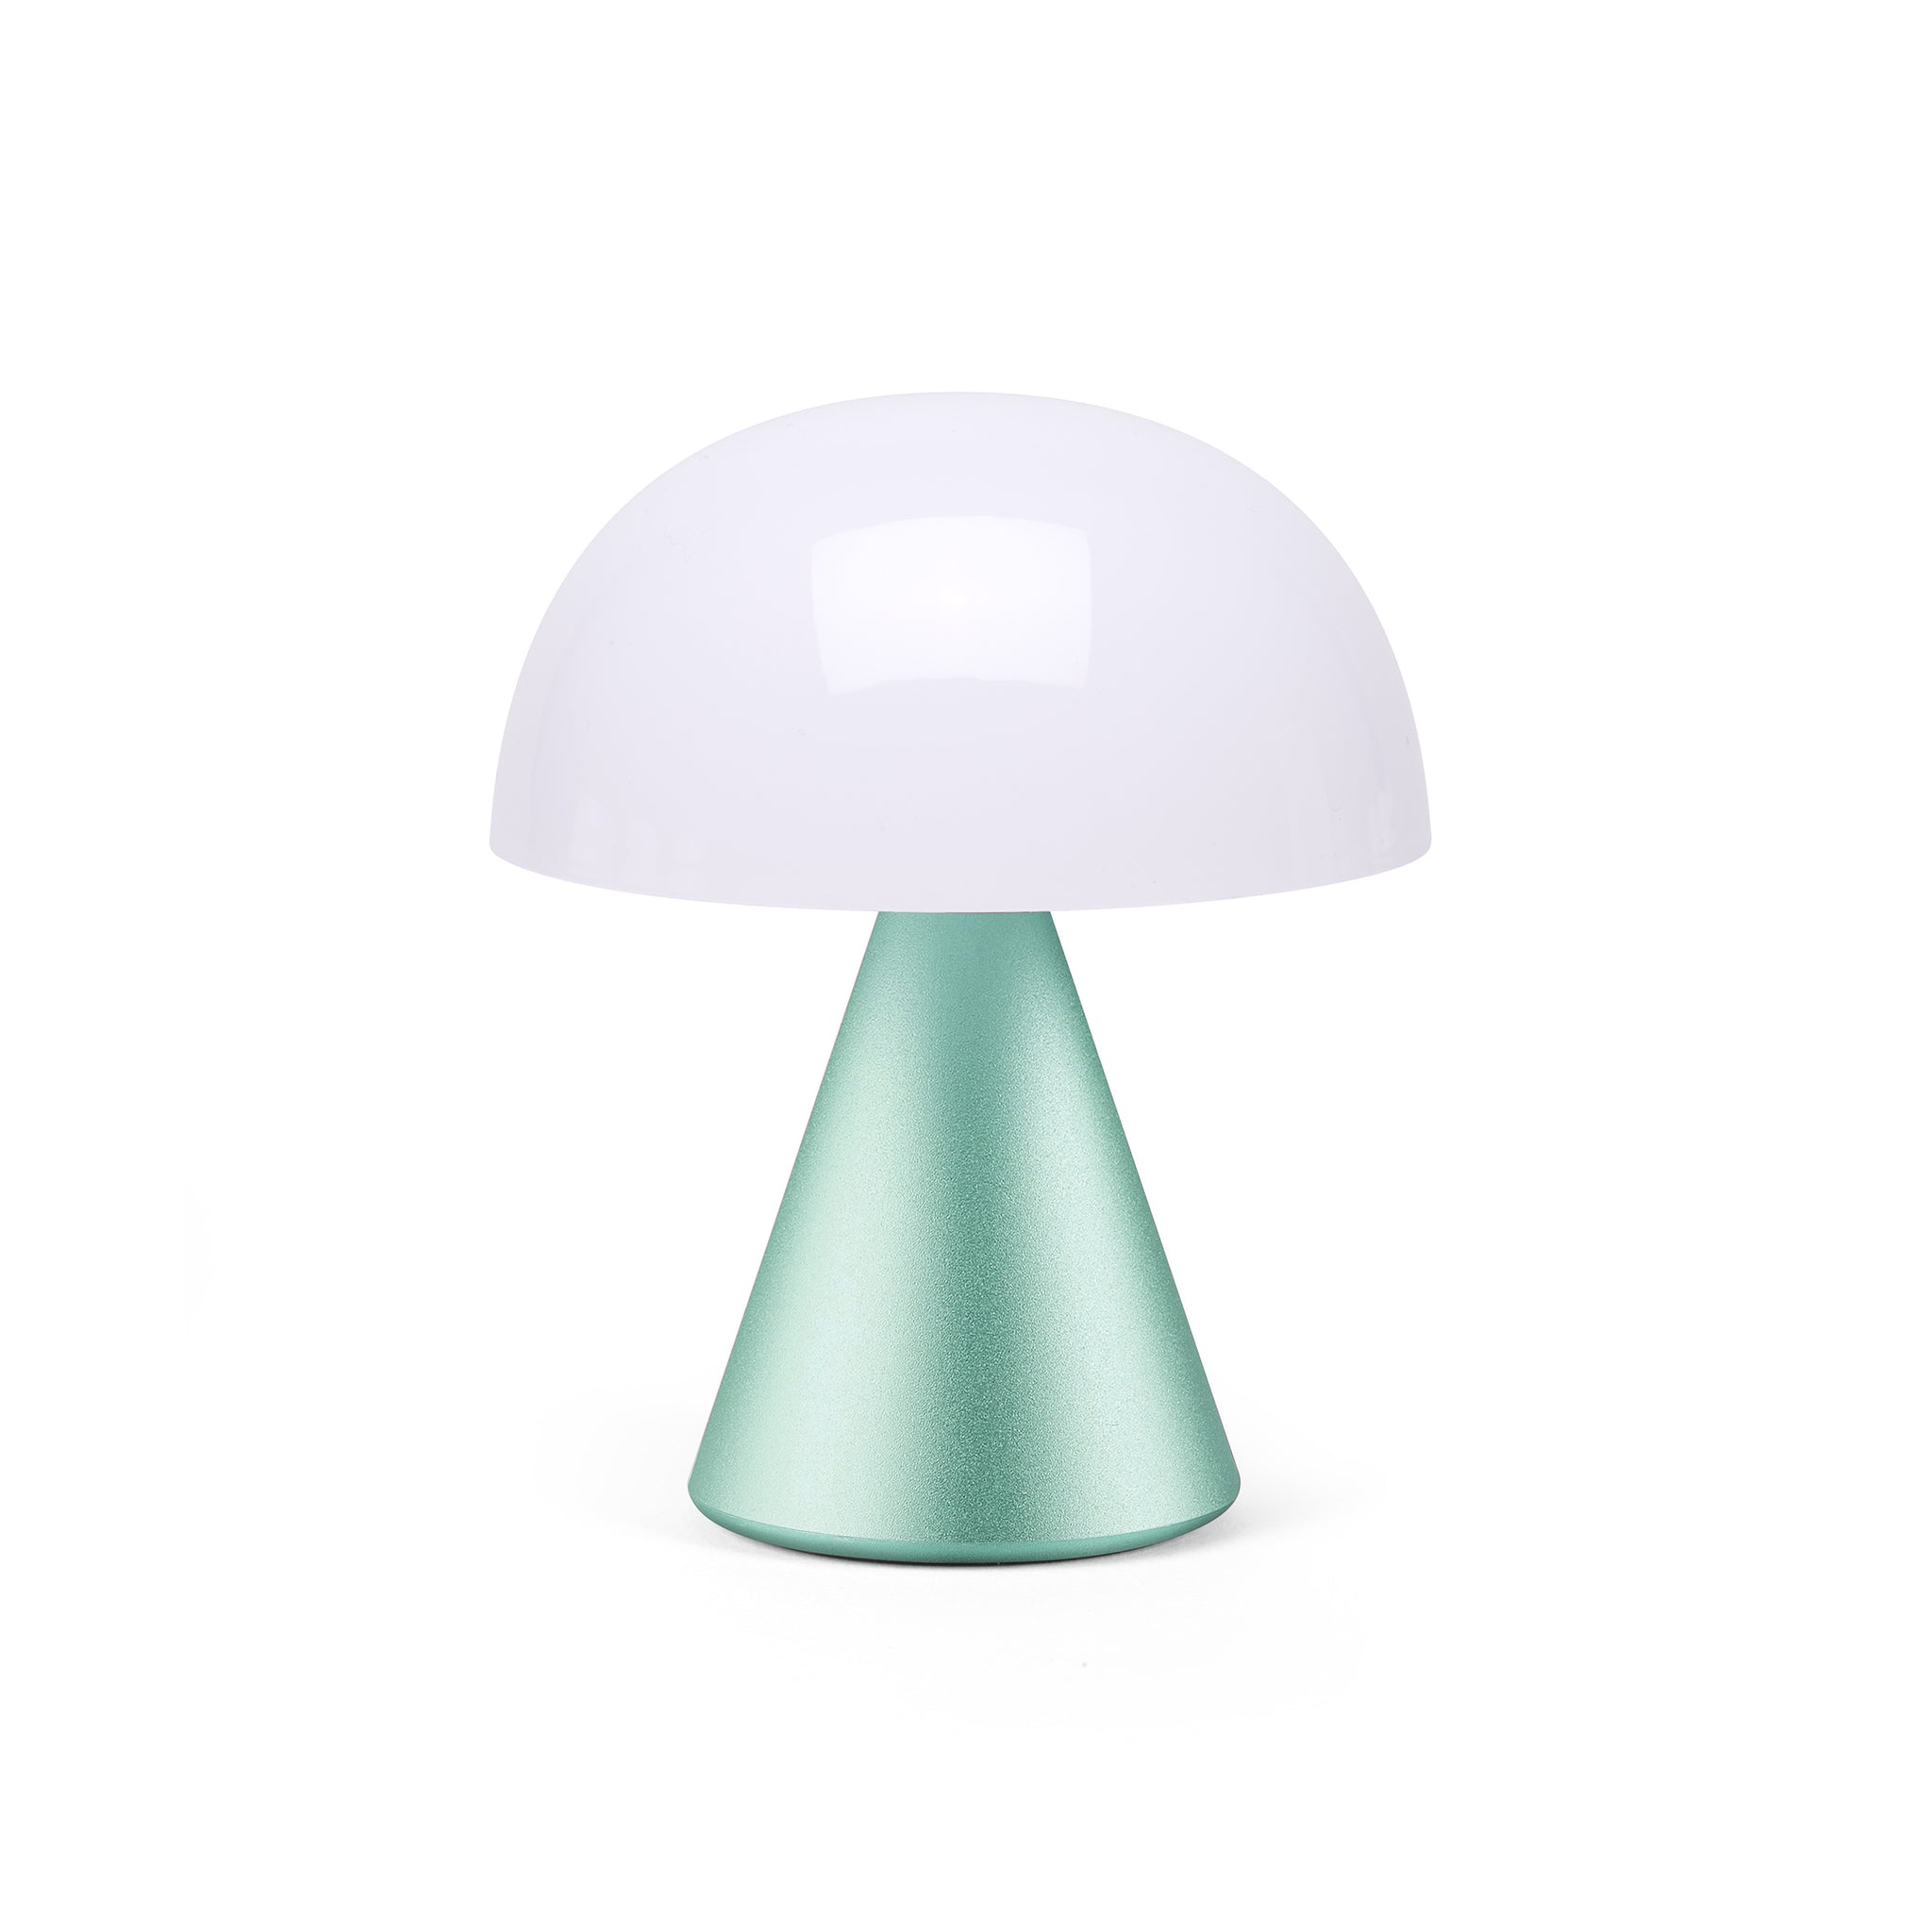 Lexon Mina Medium Mint Groen│LH64M1│Oplaadbare LED-Lamp│vooraanzicht me licht uit